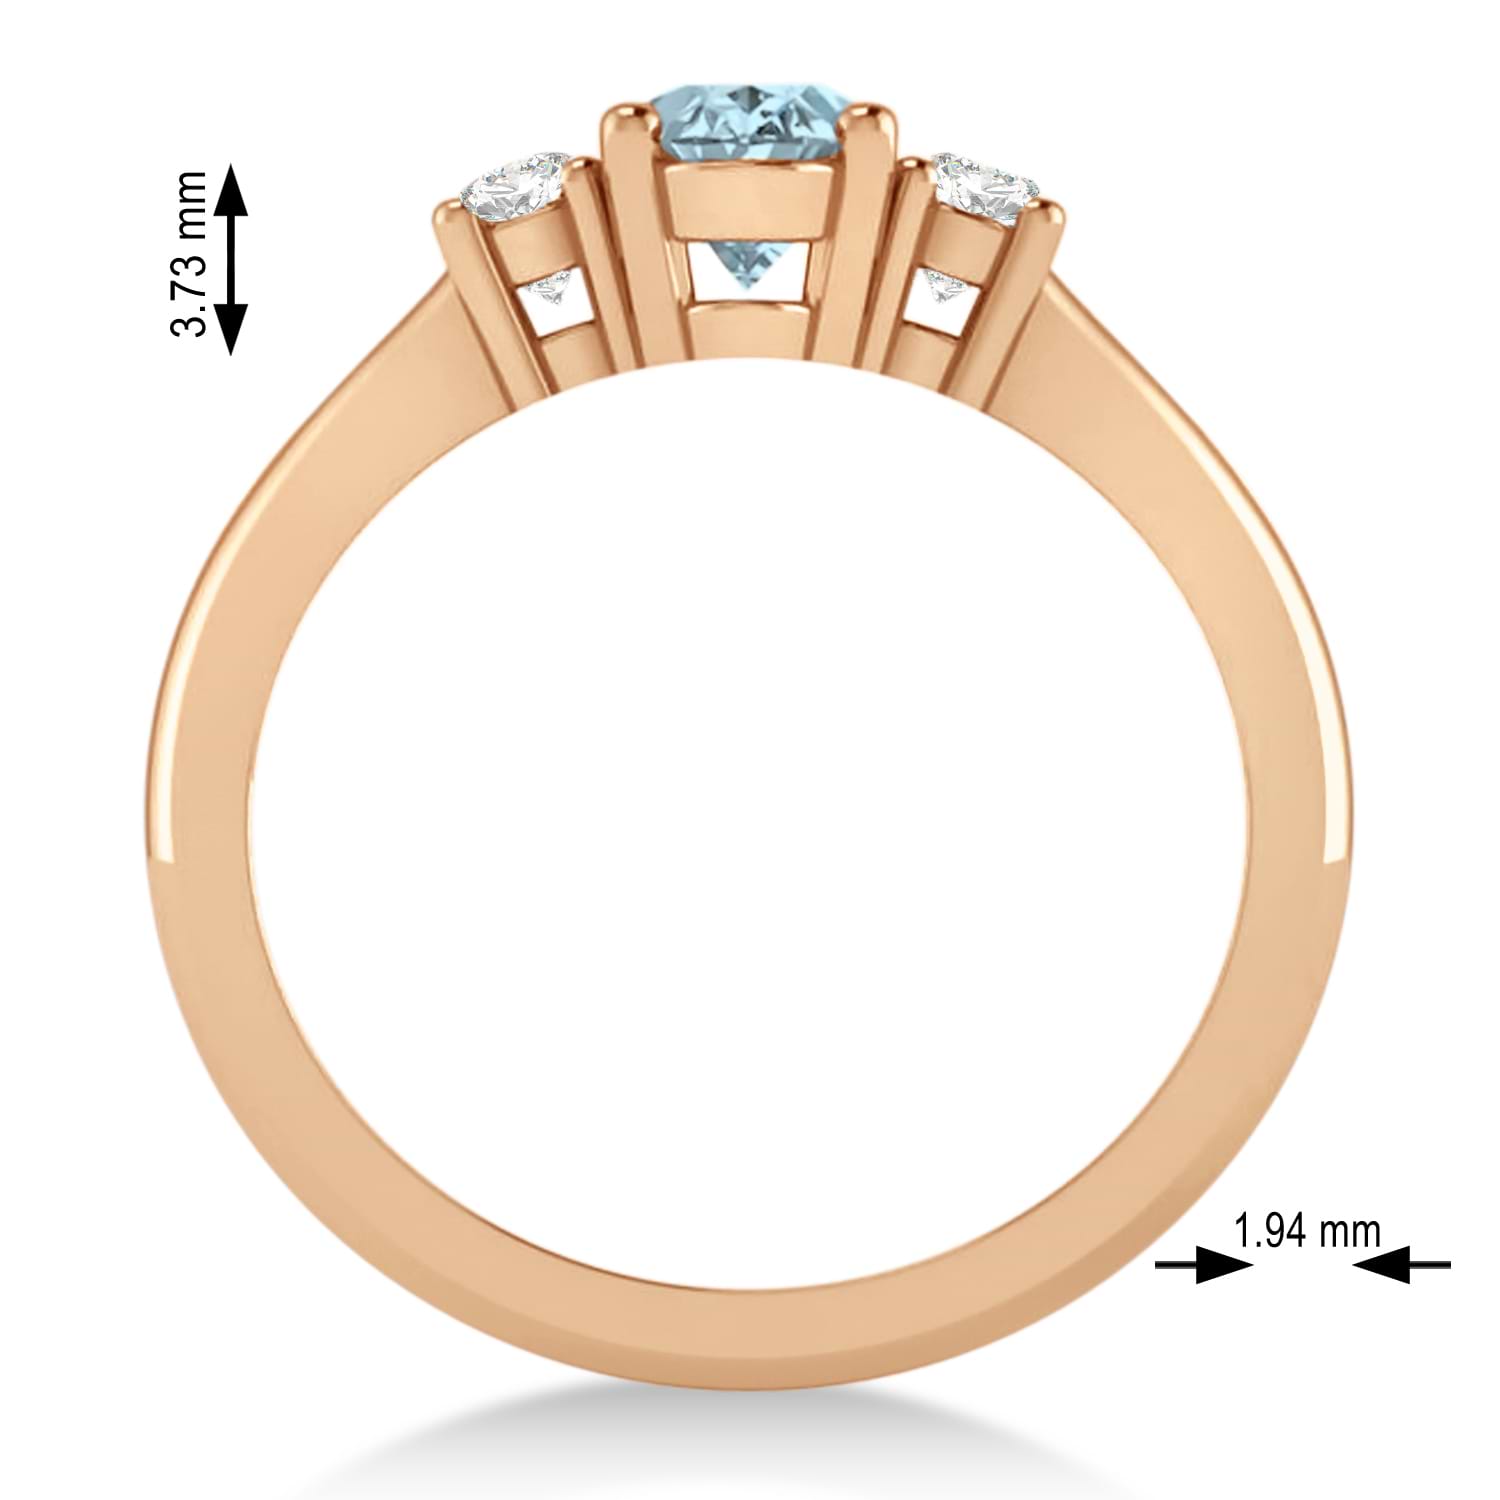 Oval Aquamarine & Diamond Three-Stone Engagement Ring 14k Rose Gold (1.20ct)